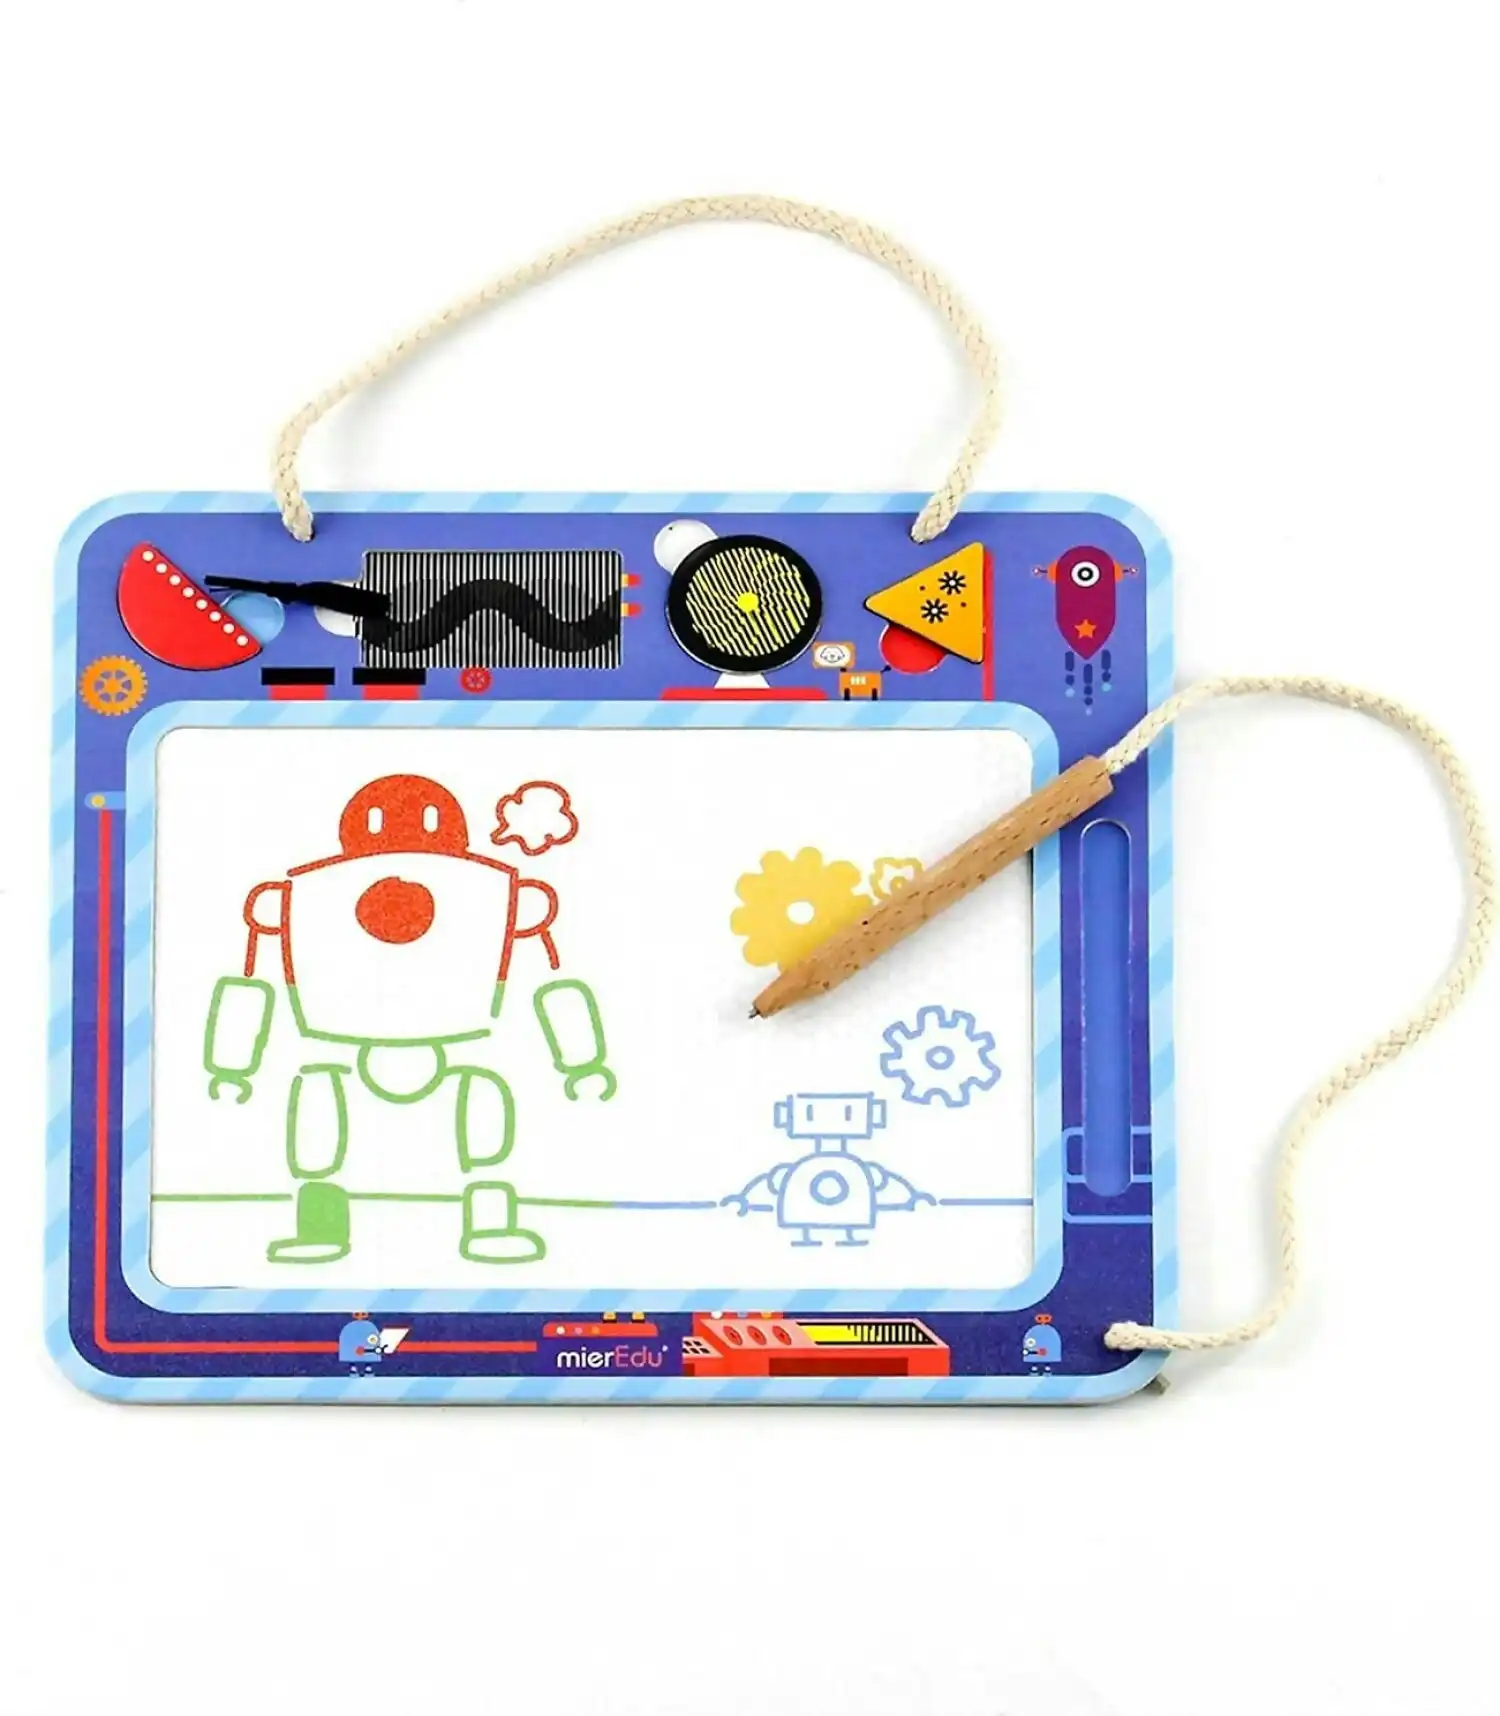 MierEdu - Magic Go Drawing Board - Doodle Robot